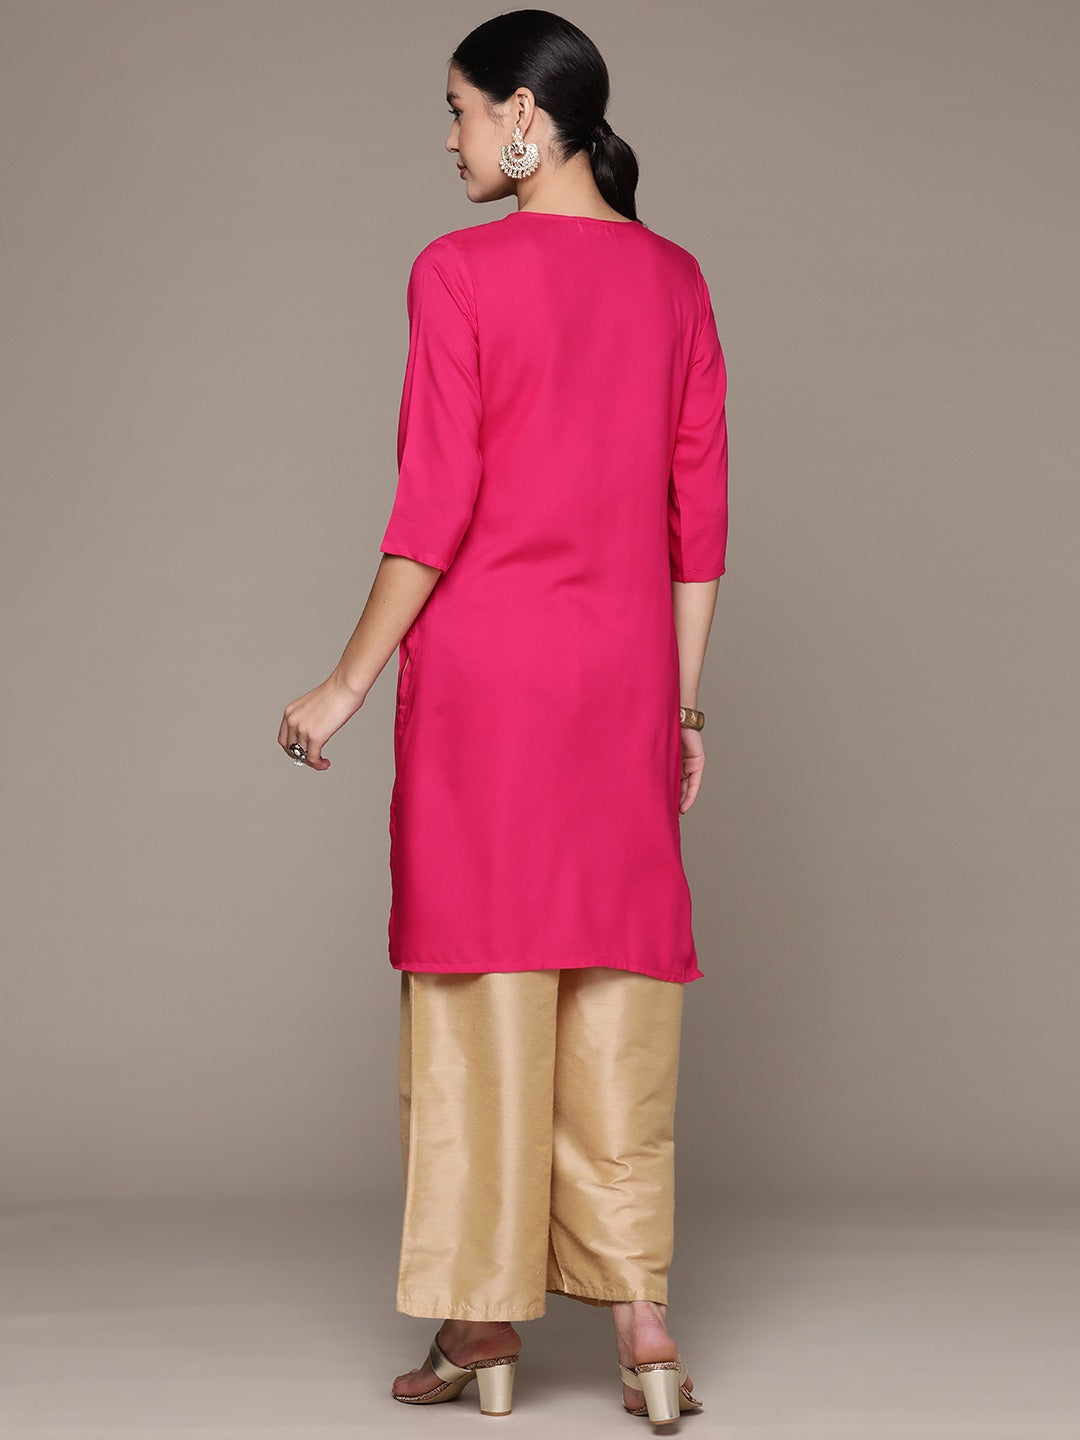 Straight Style Rayon Fabric Pink Color Kurta